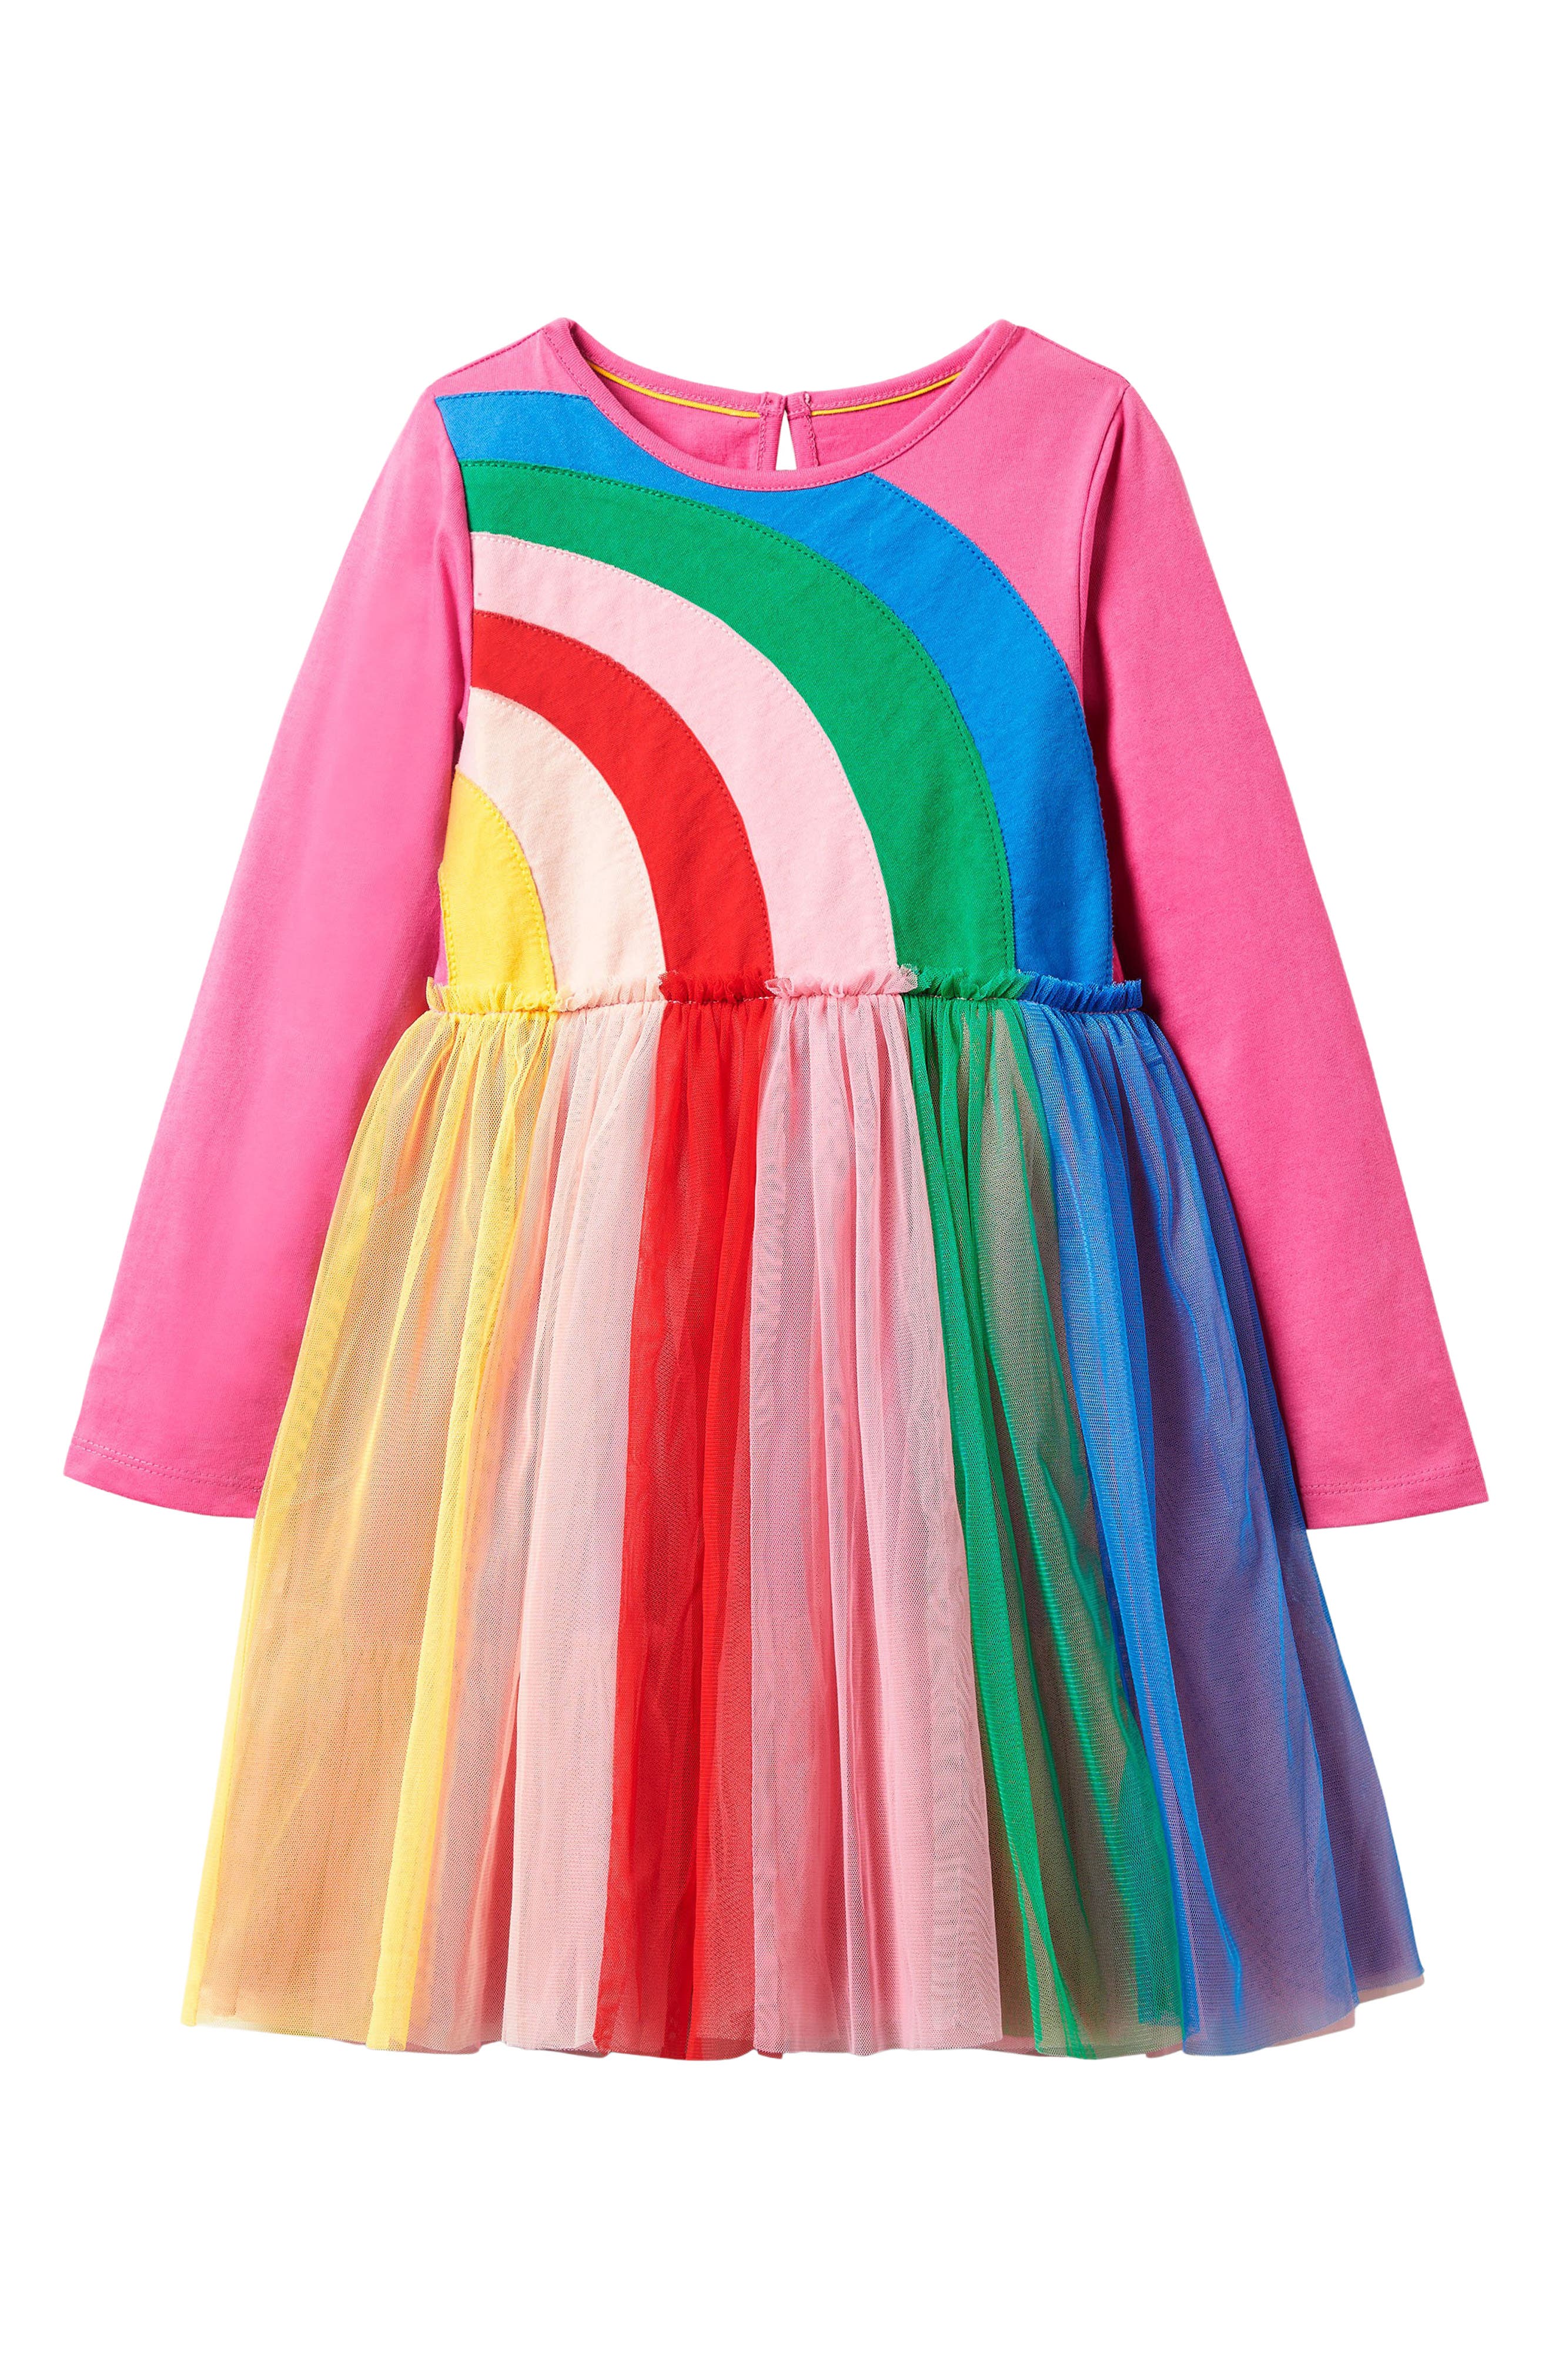 1-5T Girls Long Sleeve Rainbow Dresses Shirt Tops Long Pants Clothes Set 